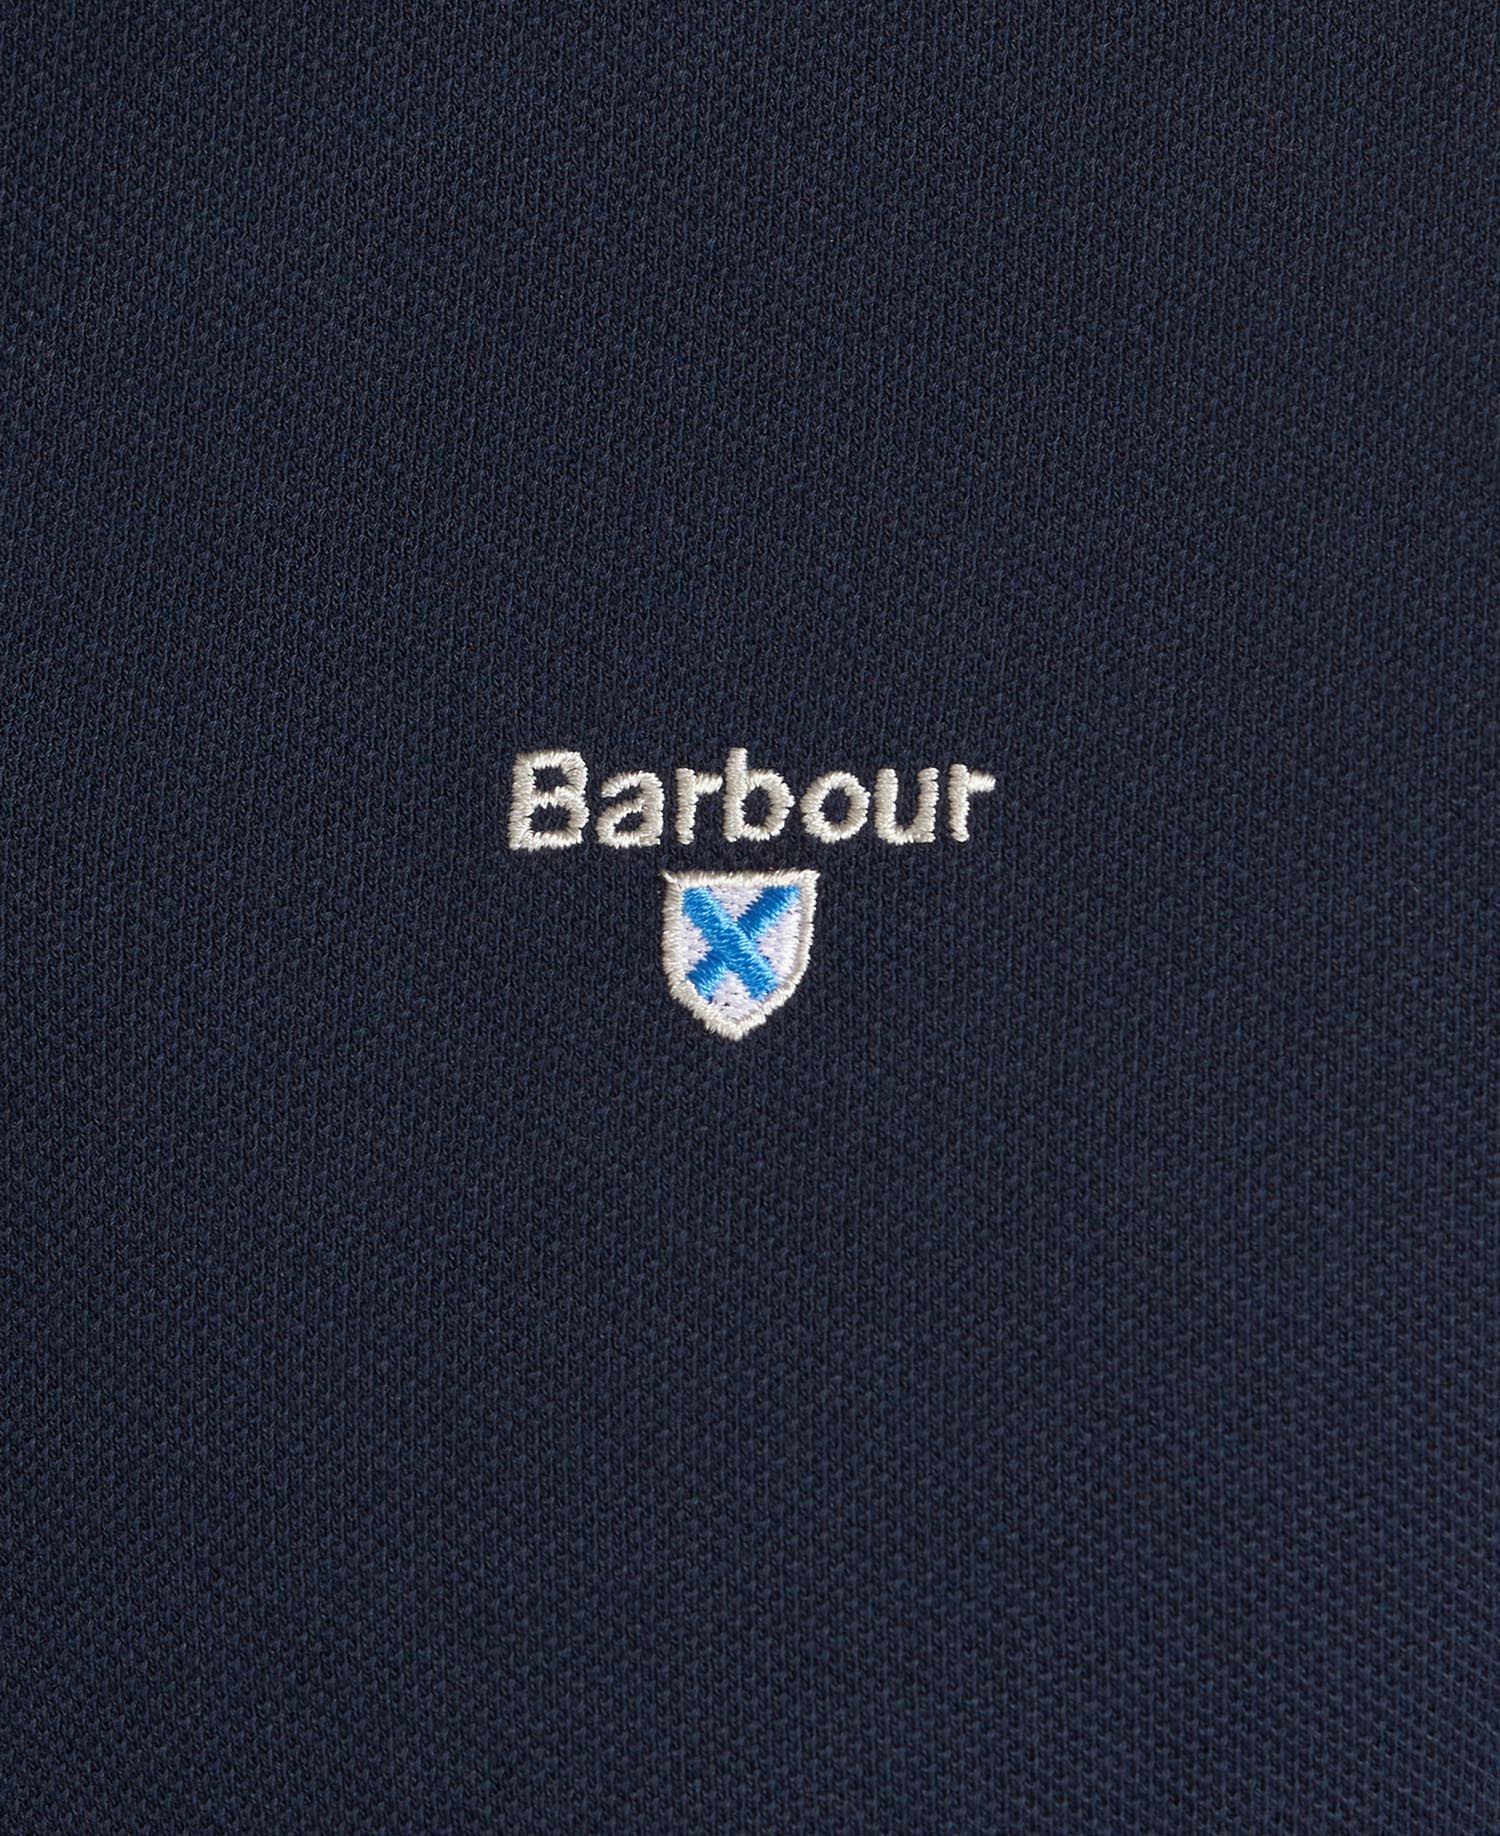 Barbour Tartan Pique Polo Shirt in Navy | Barbour